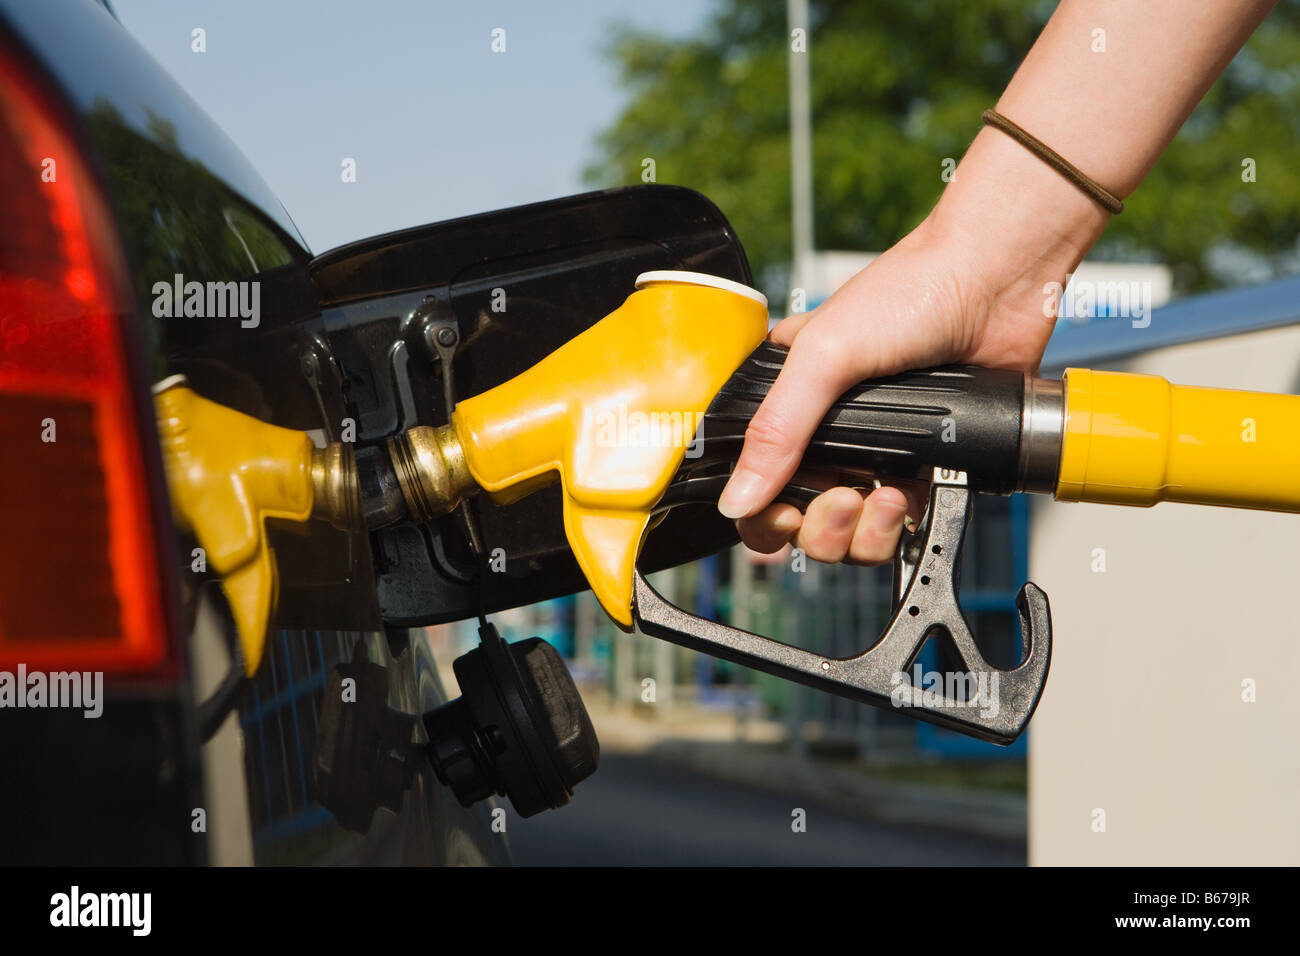 Person using petrol pump Stock Photo